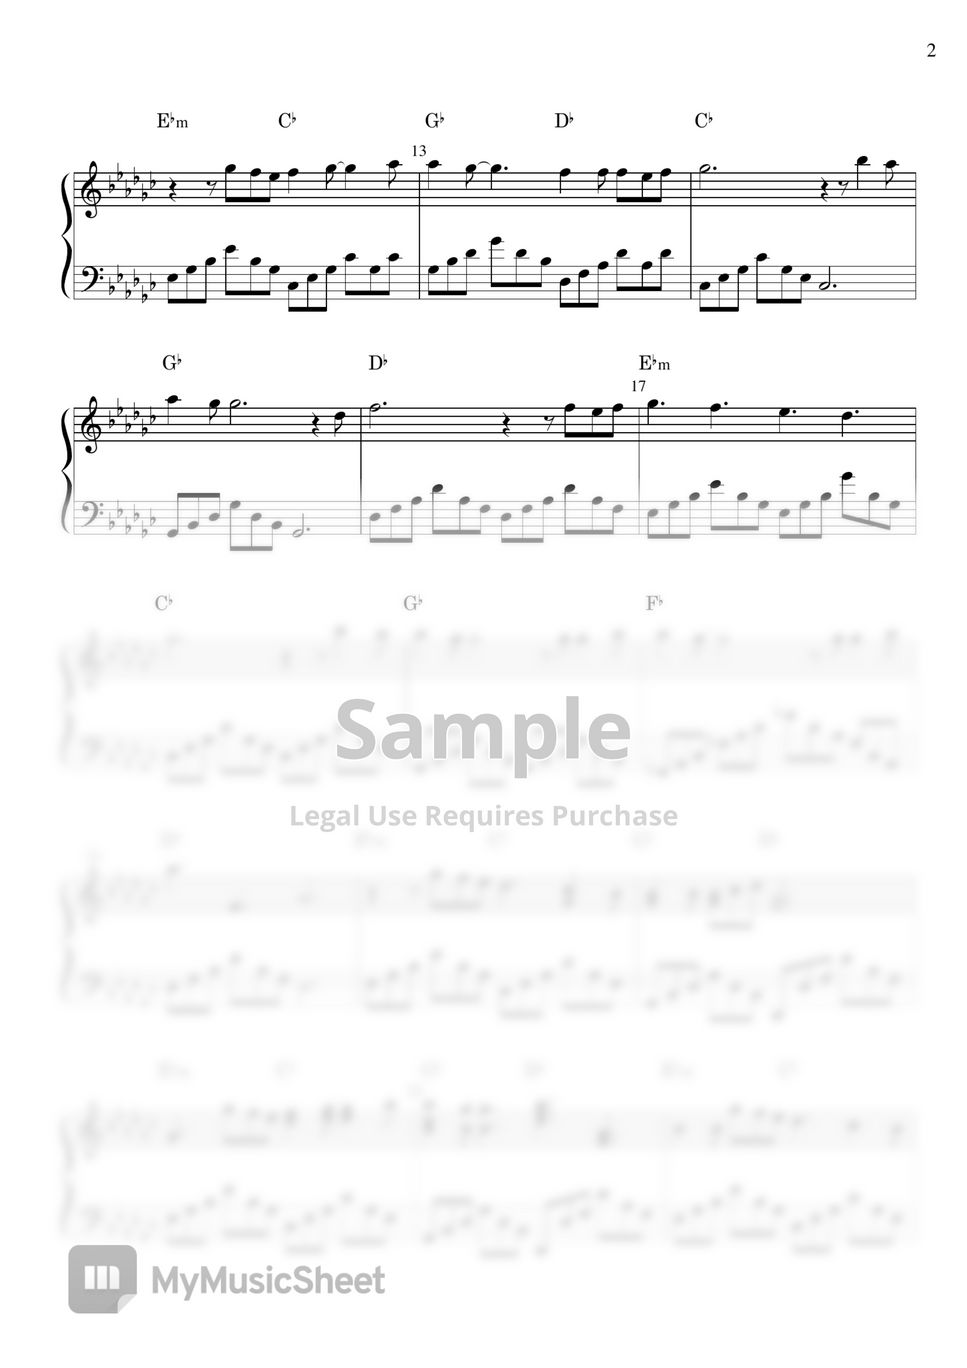 X Japan - Angel Eb minor (original key) by manogrande